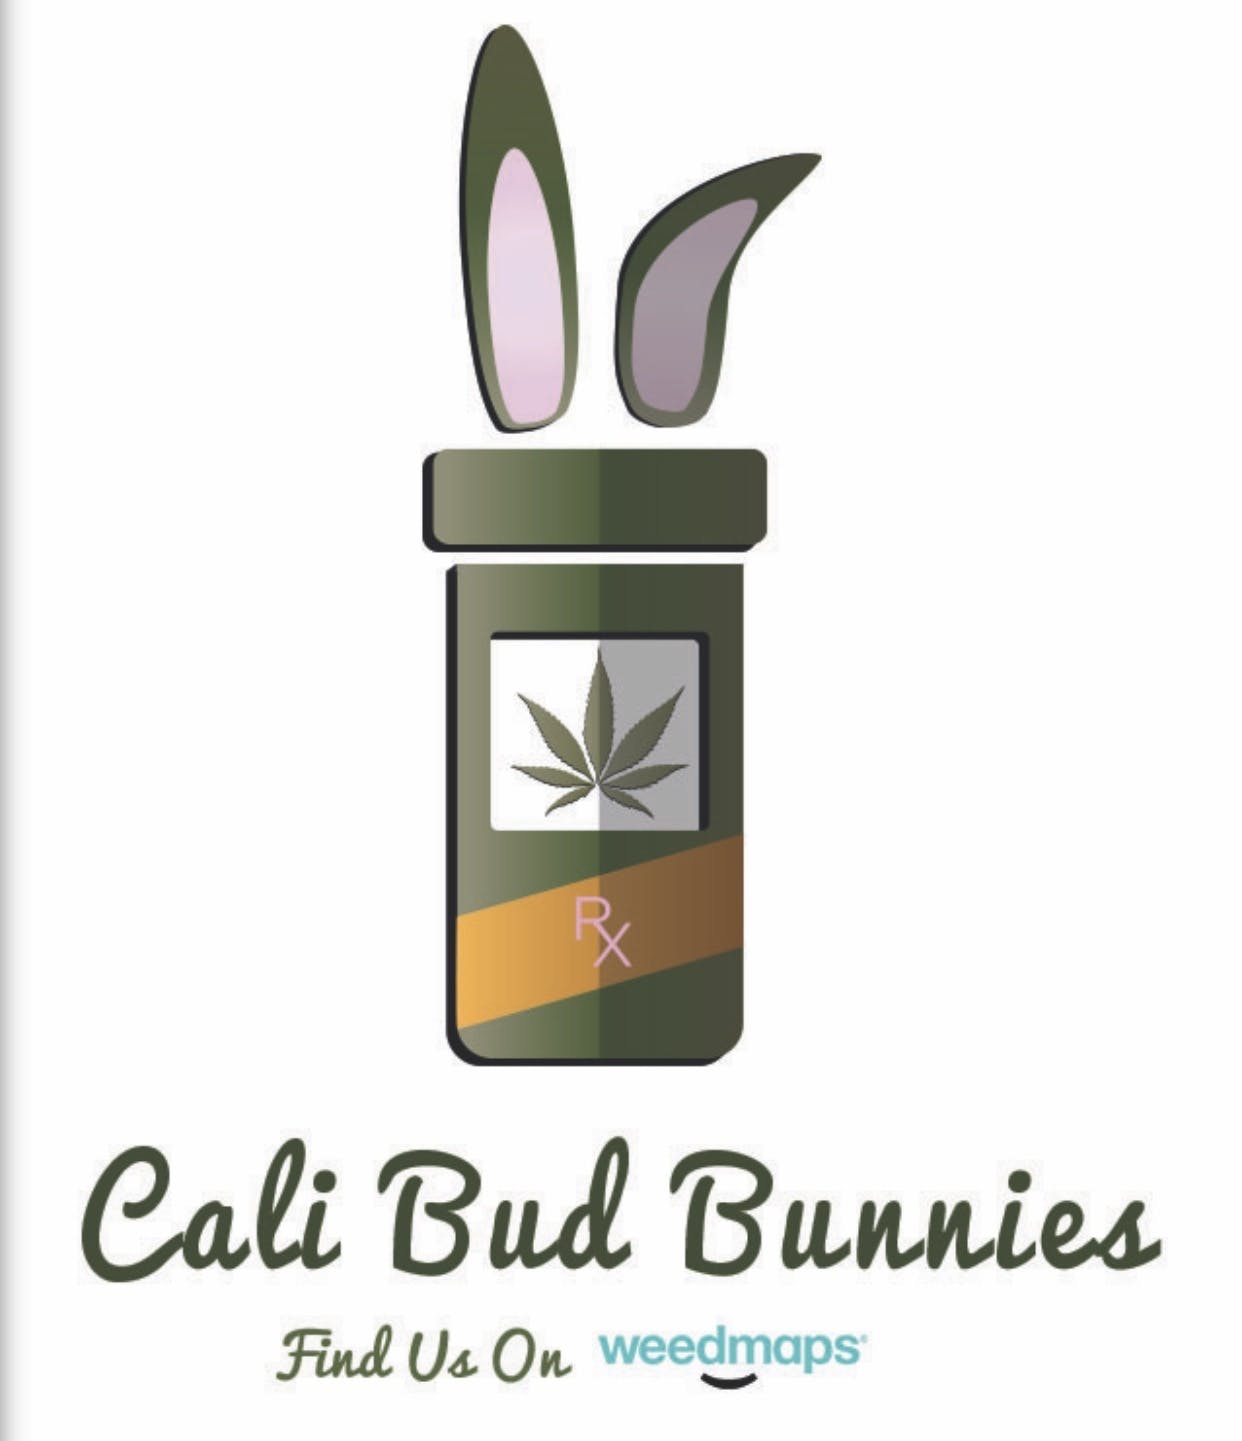 Cali Bud Bunnies 4G - Medical Marijuana Doctors - Cannabizme.com